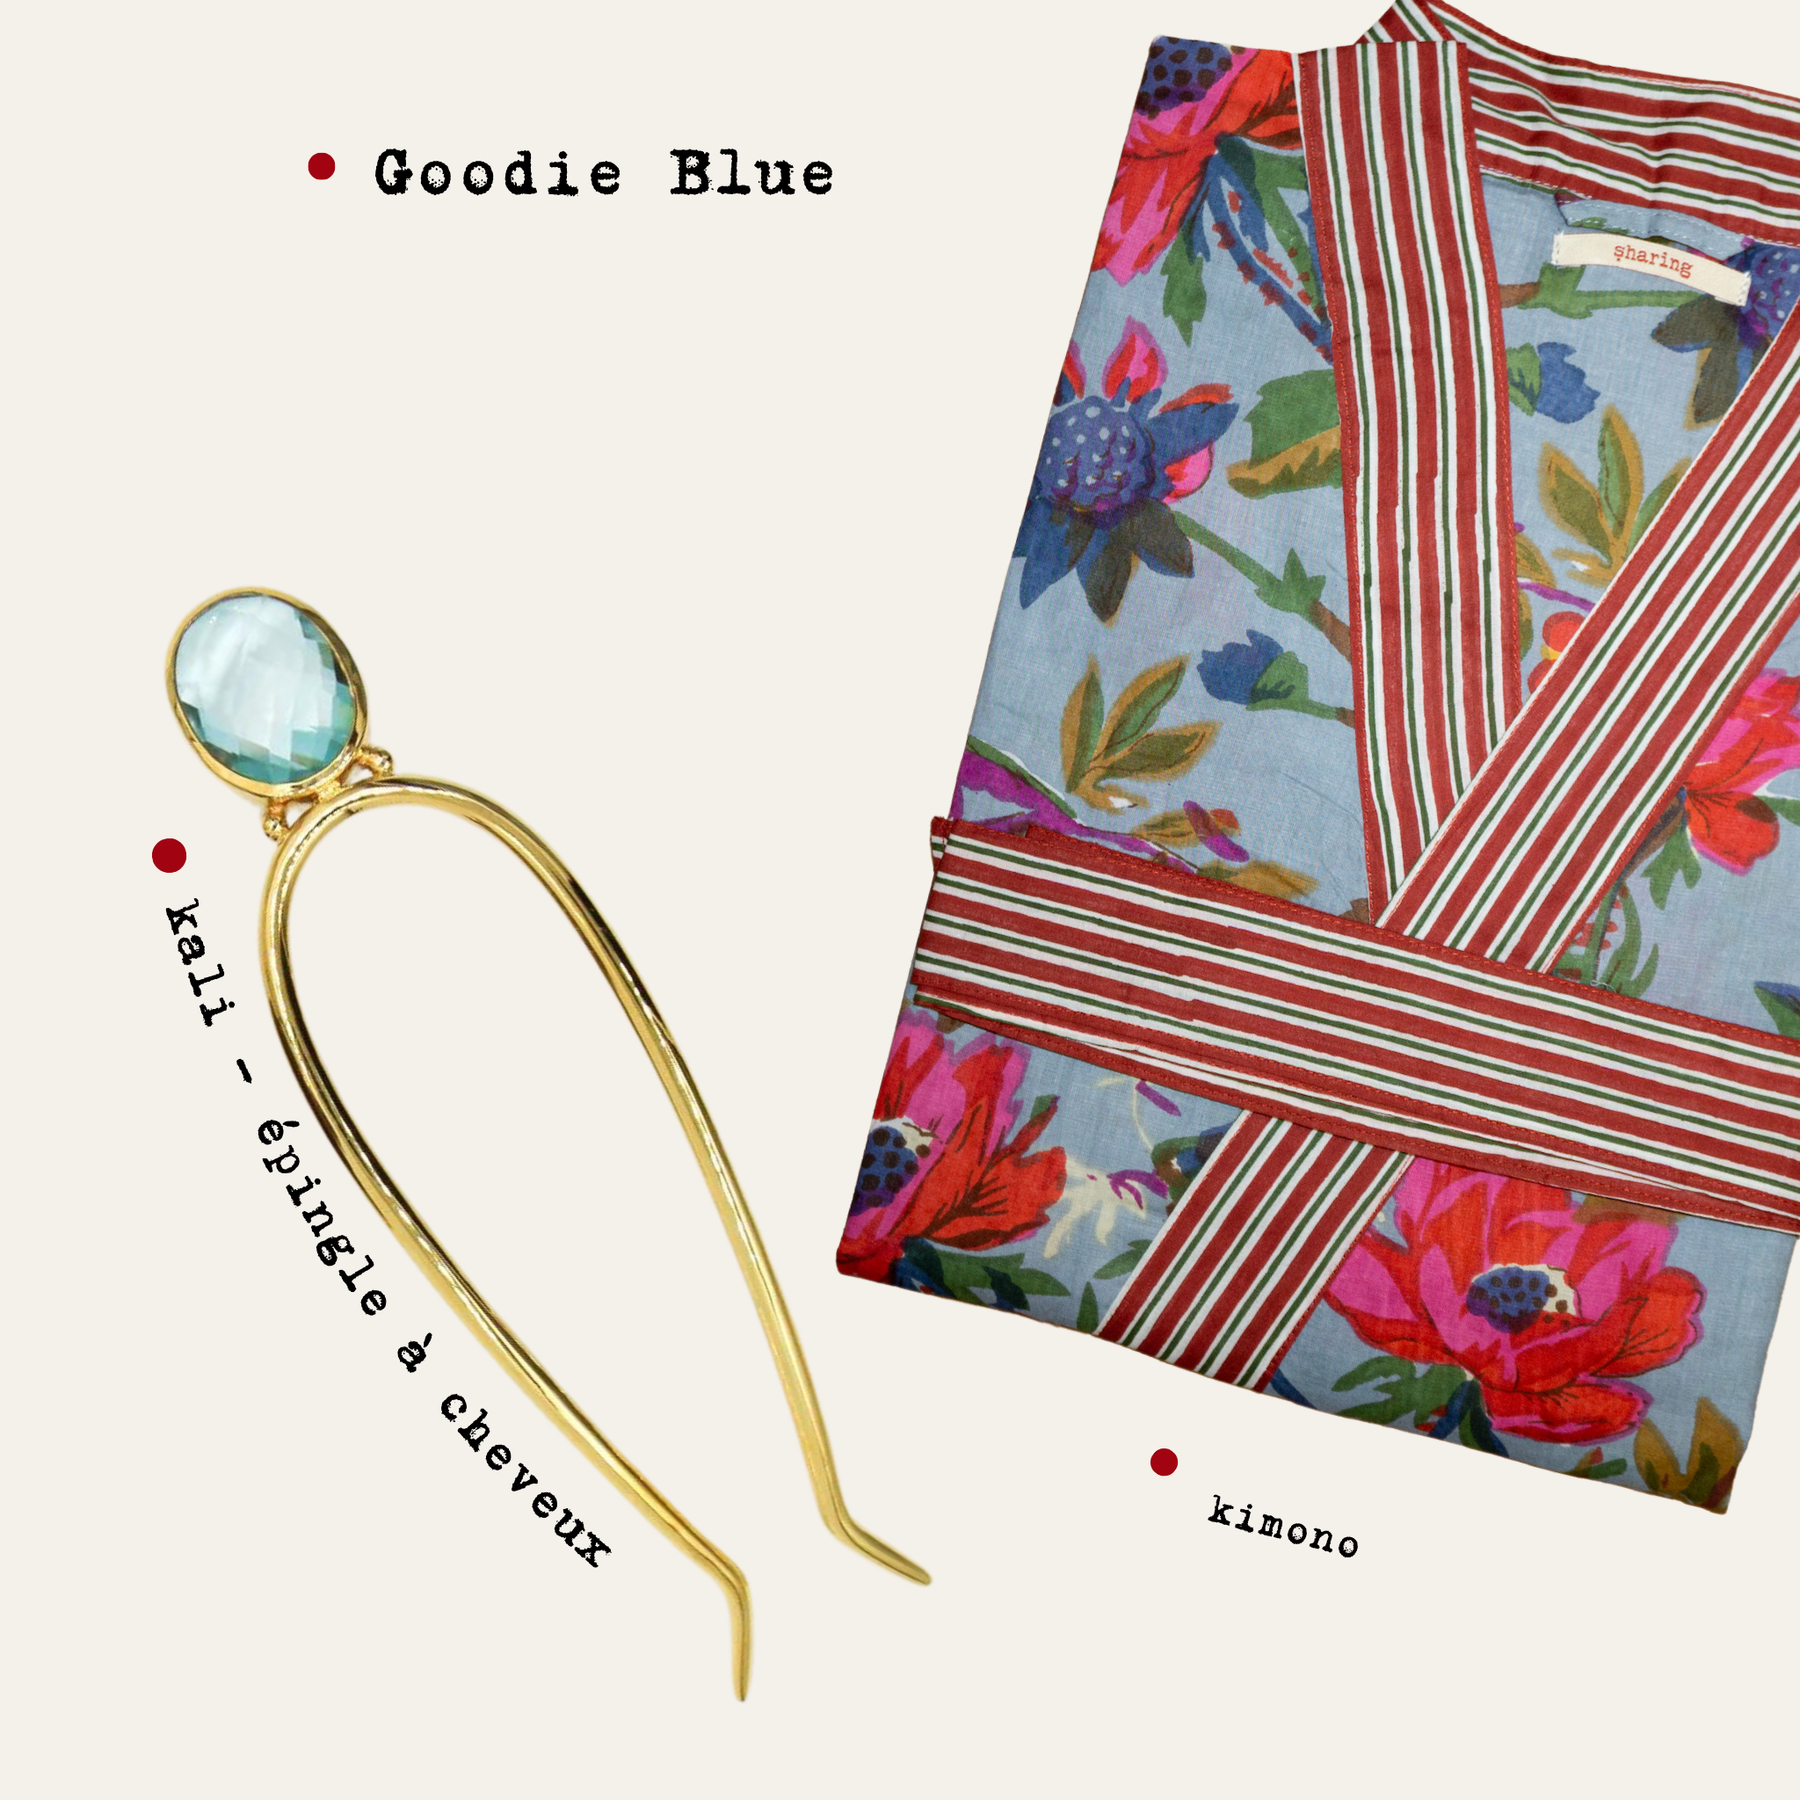 Summer Goodies - Goodie Blue - Kimono Bleu Pigeon & Kali Aigue Marine